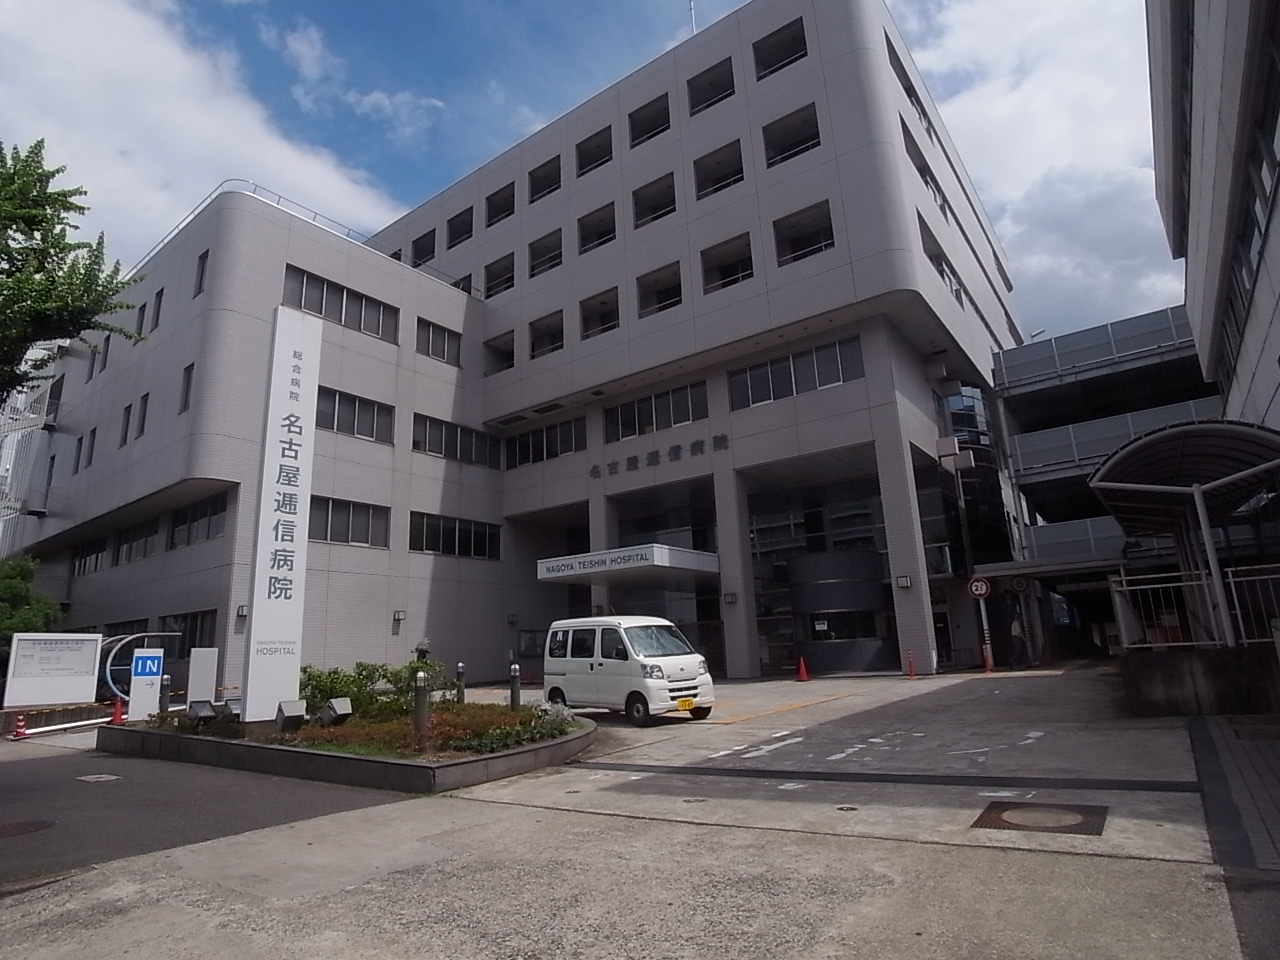 Hospital. 800m to Nagoya Teishin hospital (hospital)